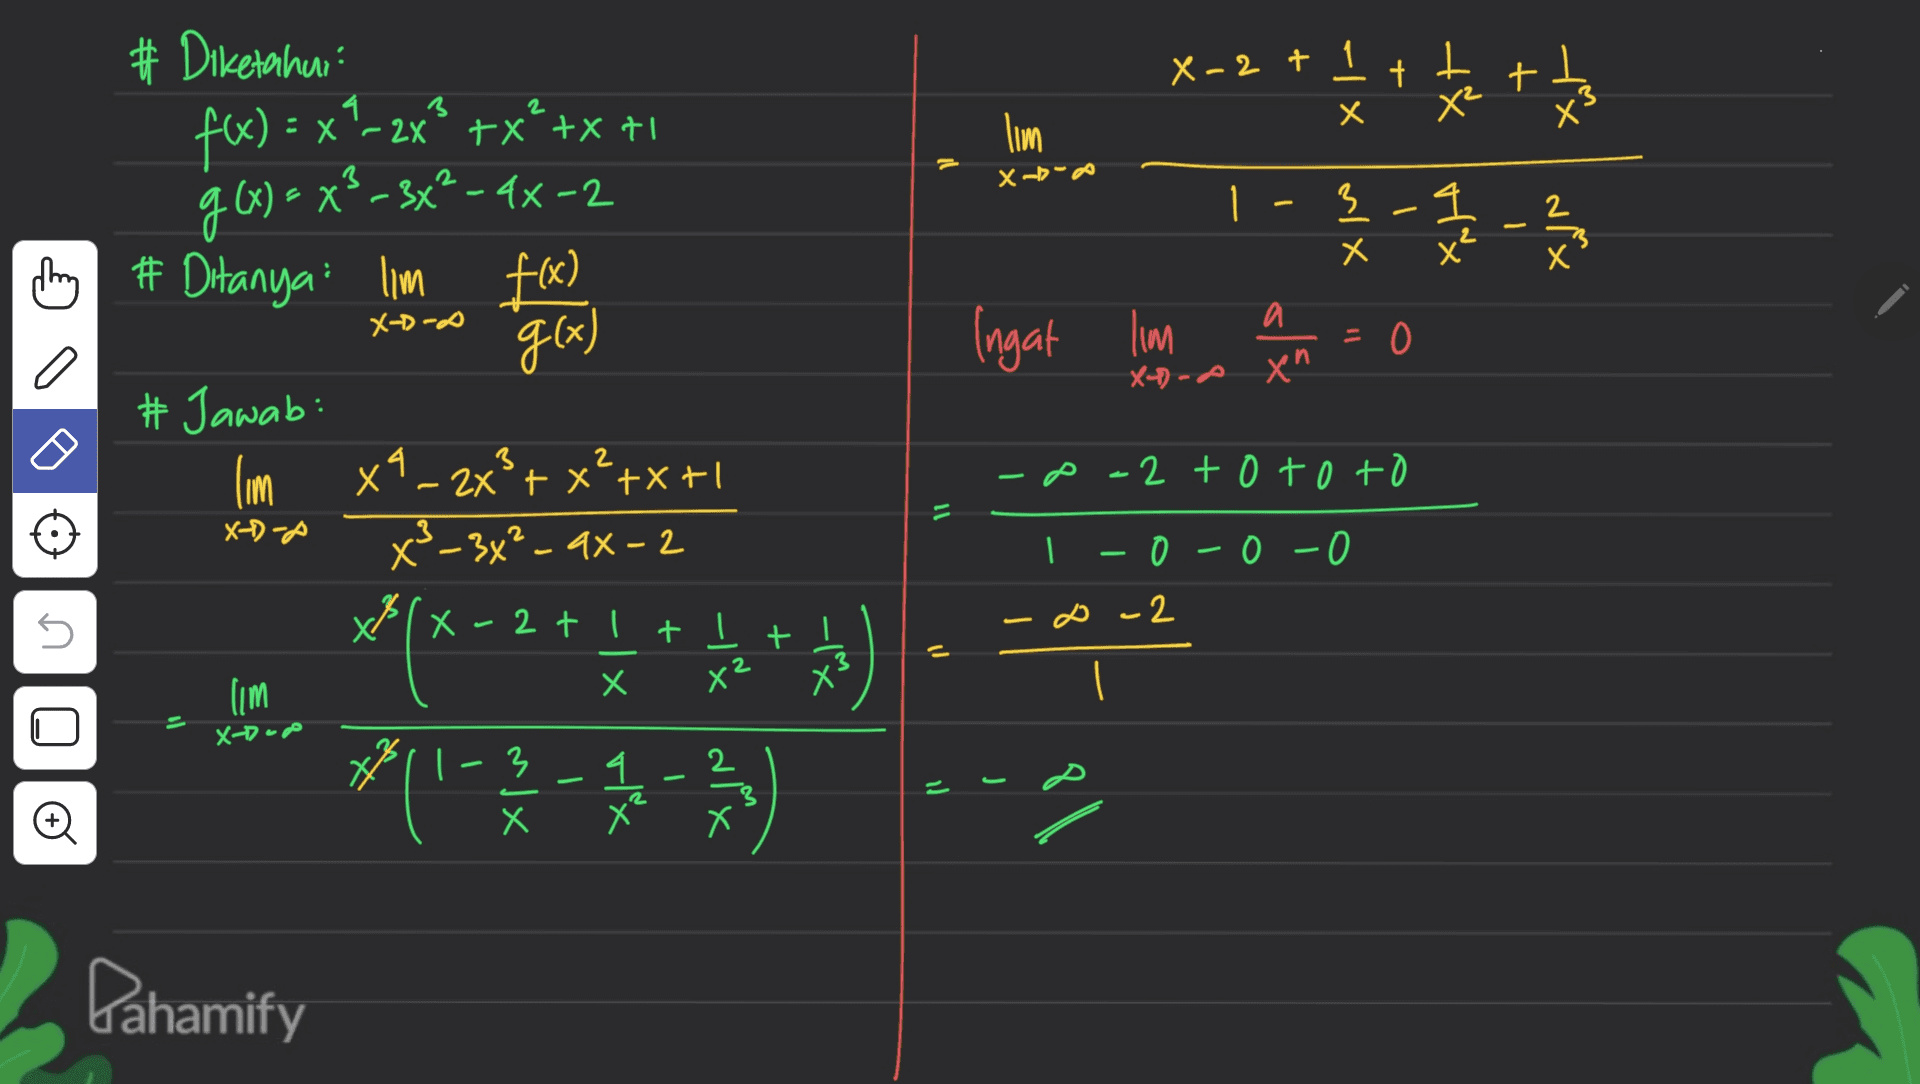 X-2 + 1 - X + t lum # Diketahui fax) = x +- 2x* +x++x+1 g6x ) = x3–3x2 - 4x =2 m # Ditanya lim fa) +² | HX tx dix 1 - - 3 x - X-D-A и a 11 g(x) Ingat lim O XA) - A xn # Jawab: lim -p-2 to toto x4 - 2x + x²+x+1 X-3&²_ax-2 = X-D-P 1 - -0-0-0 Qin 2۔ می X-2t It It X Х E lim X-top Oo x*(x = 2* * * *[是一条) ะ - Pahamify 